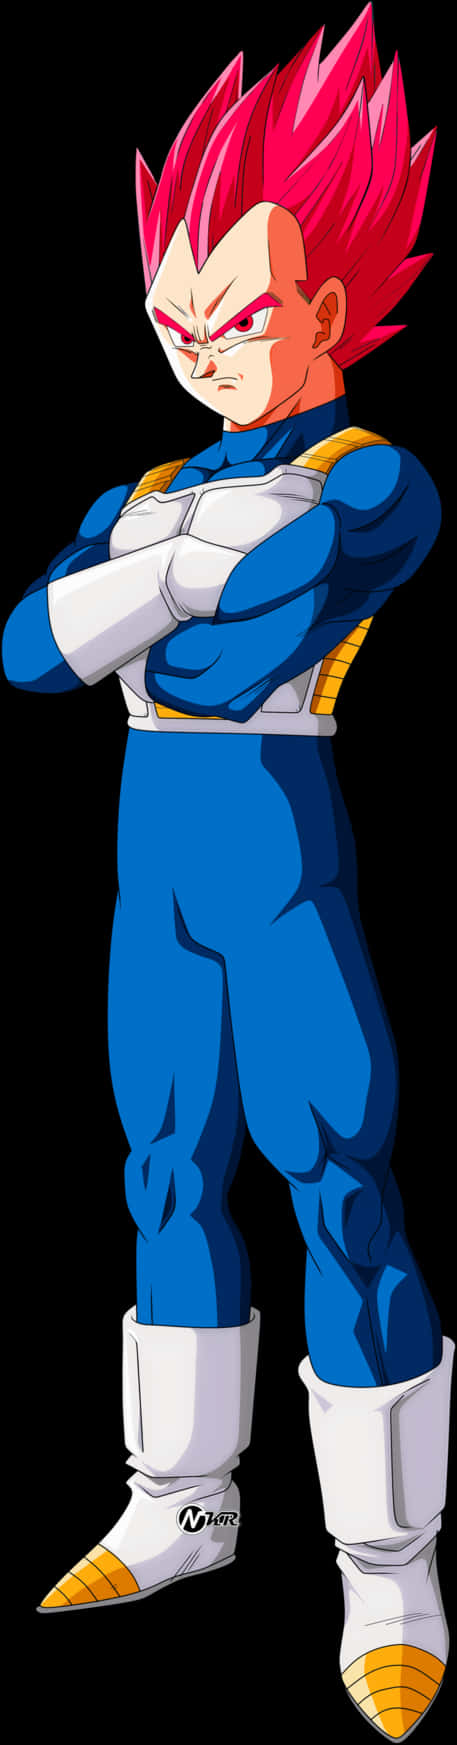 Cartoon Of A Man In Blue